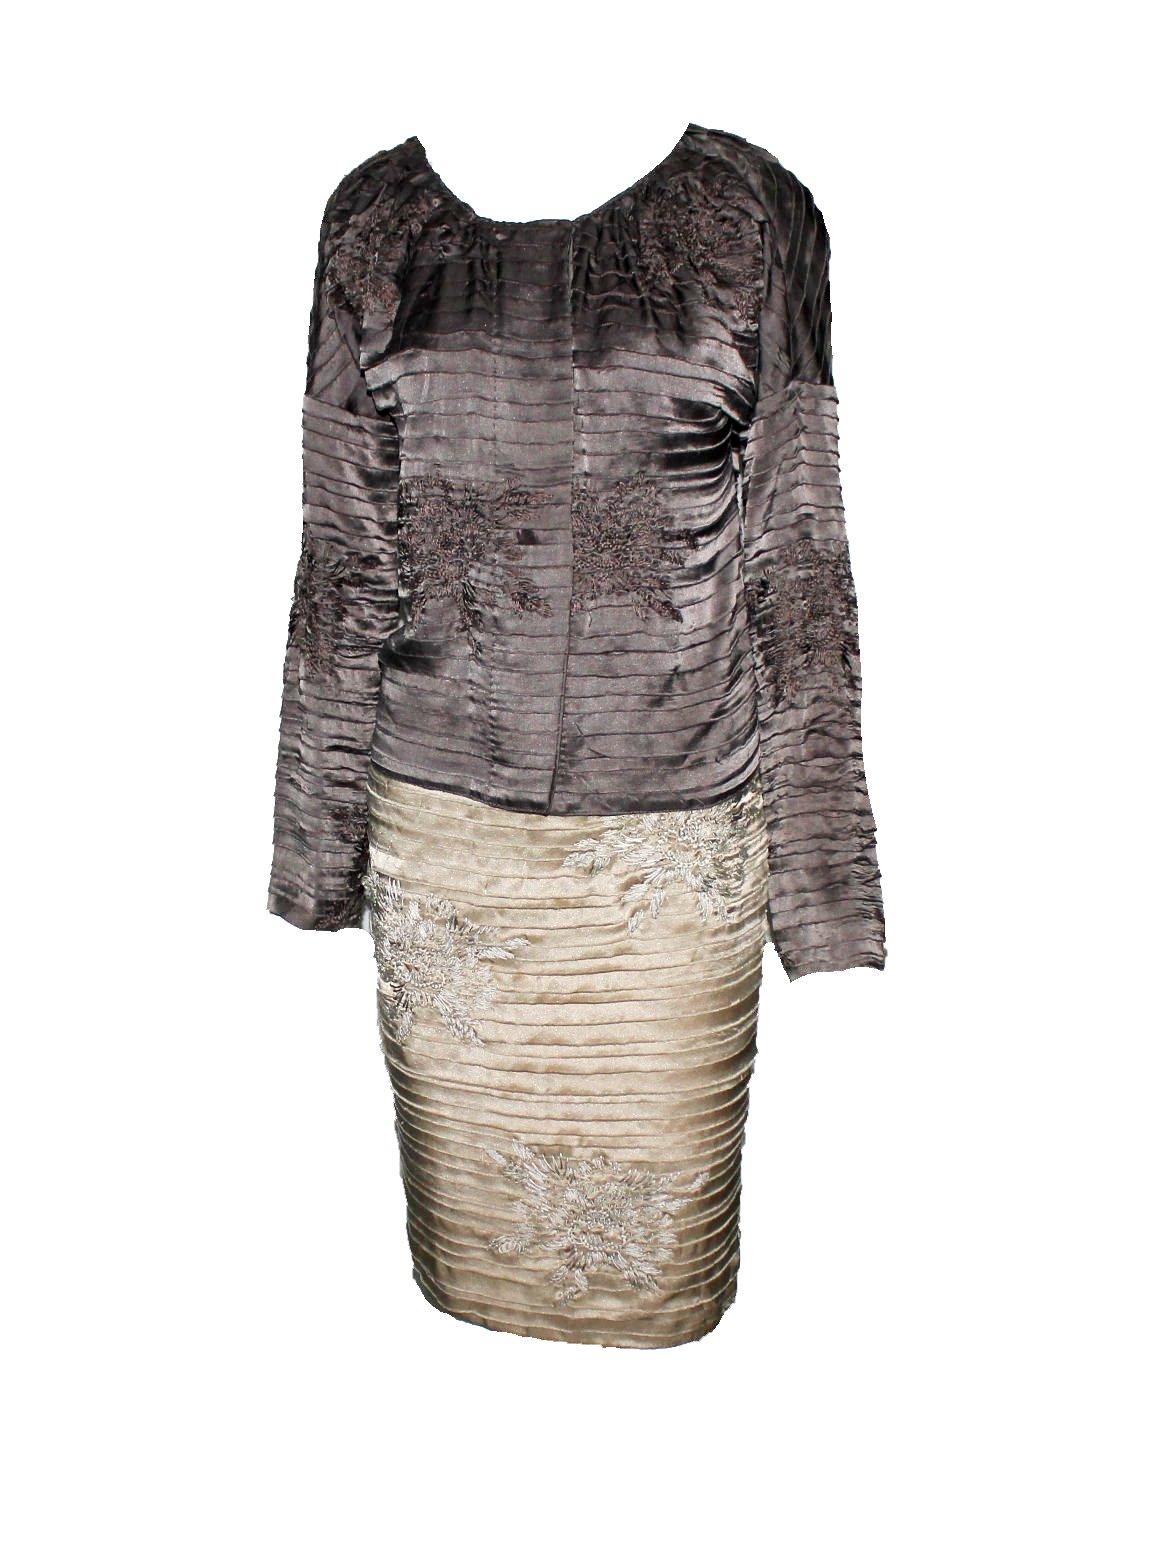 Superbe veste en soie brodée de la collection Kimono Gucci by Tom Ford, 2003 en vente 4